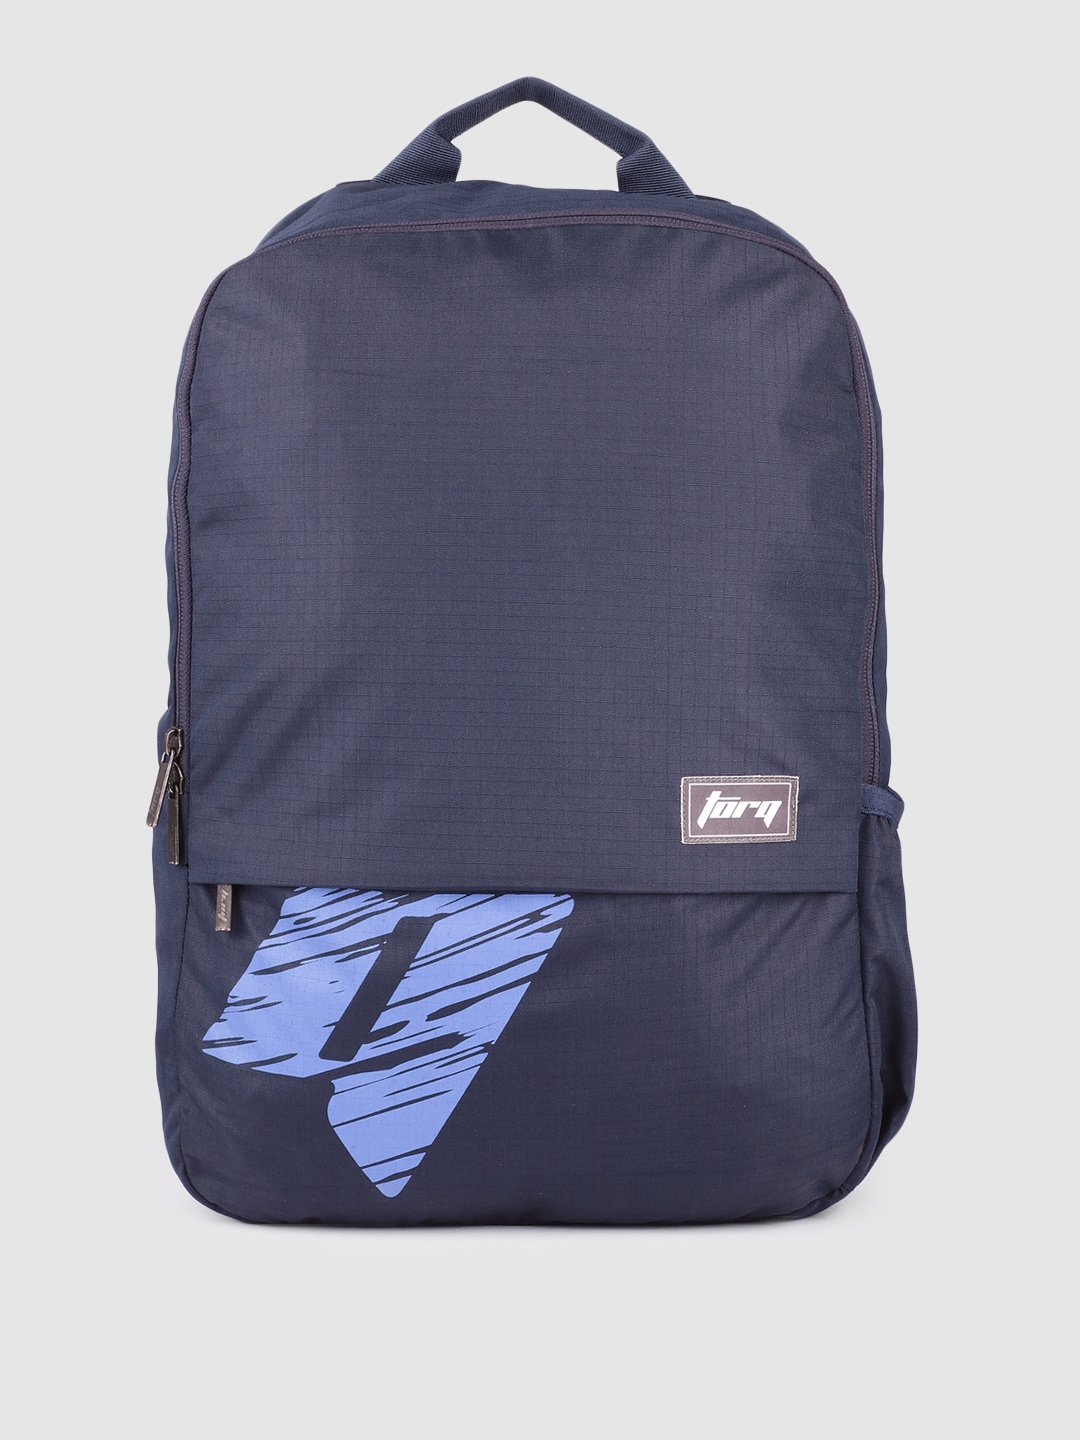 Wildcraft Unisex Navy Blue Brand Logo Backpack Price in India